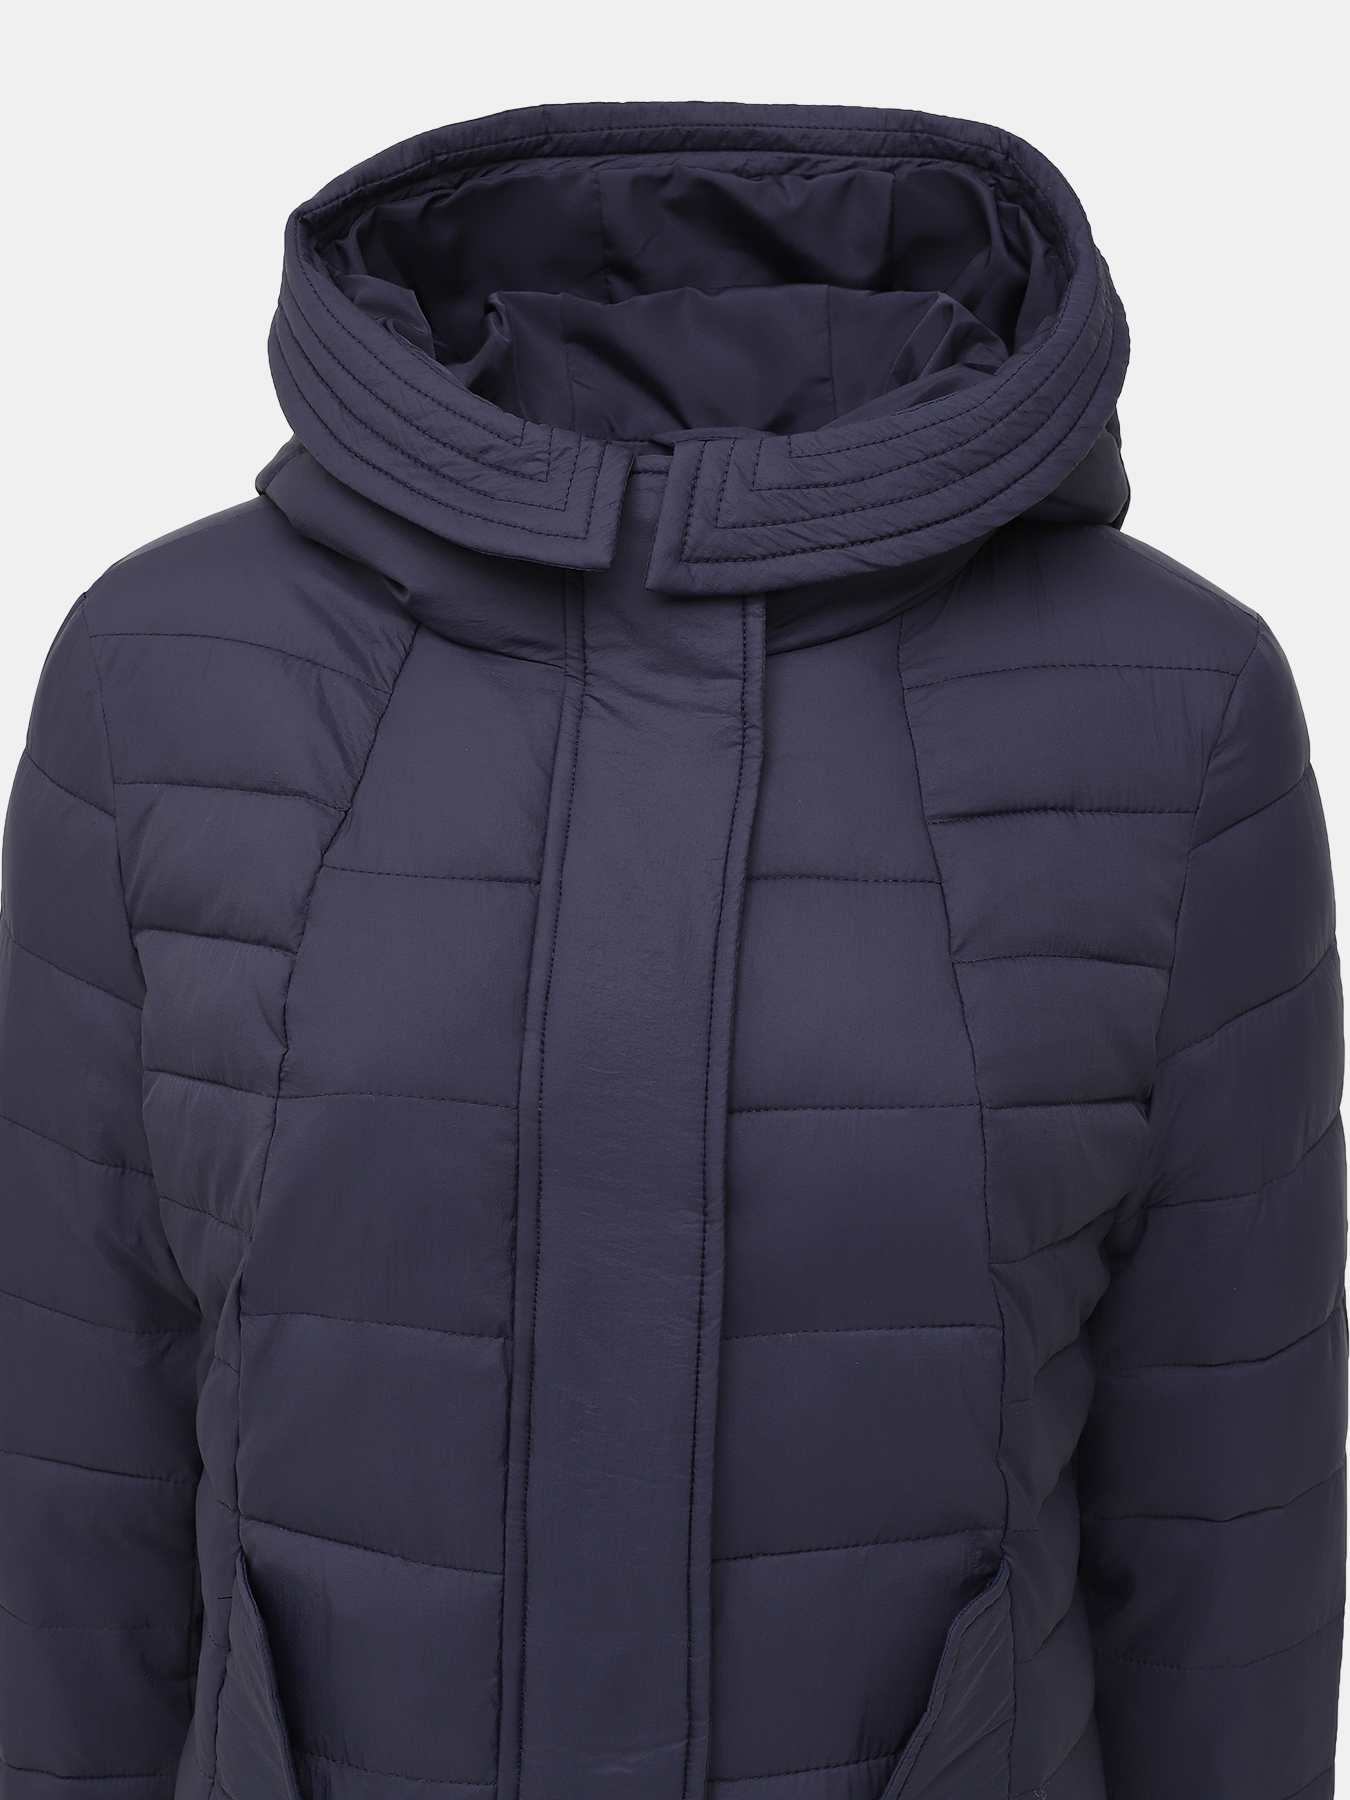 Пальто зимнее Alessandro Manzoni Purpur 384503-058, цвет темно-синий, размер 54-56 - фото 3